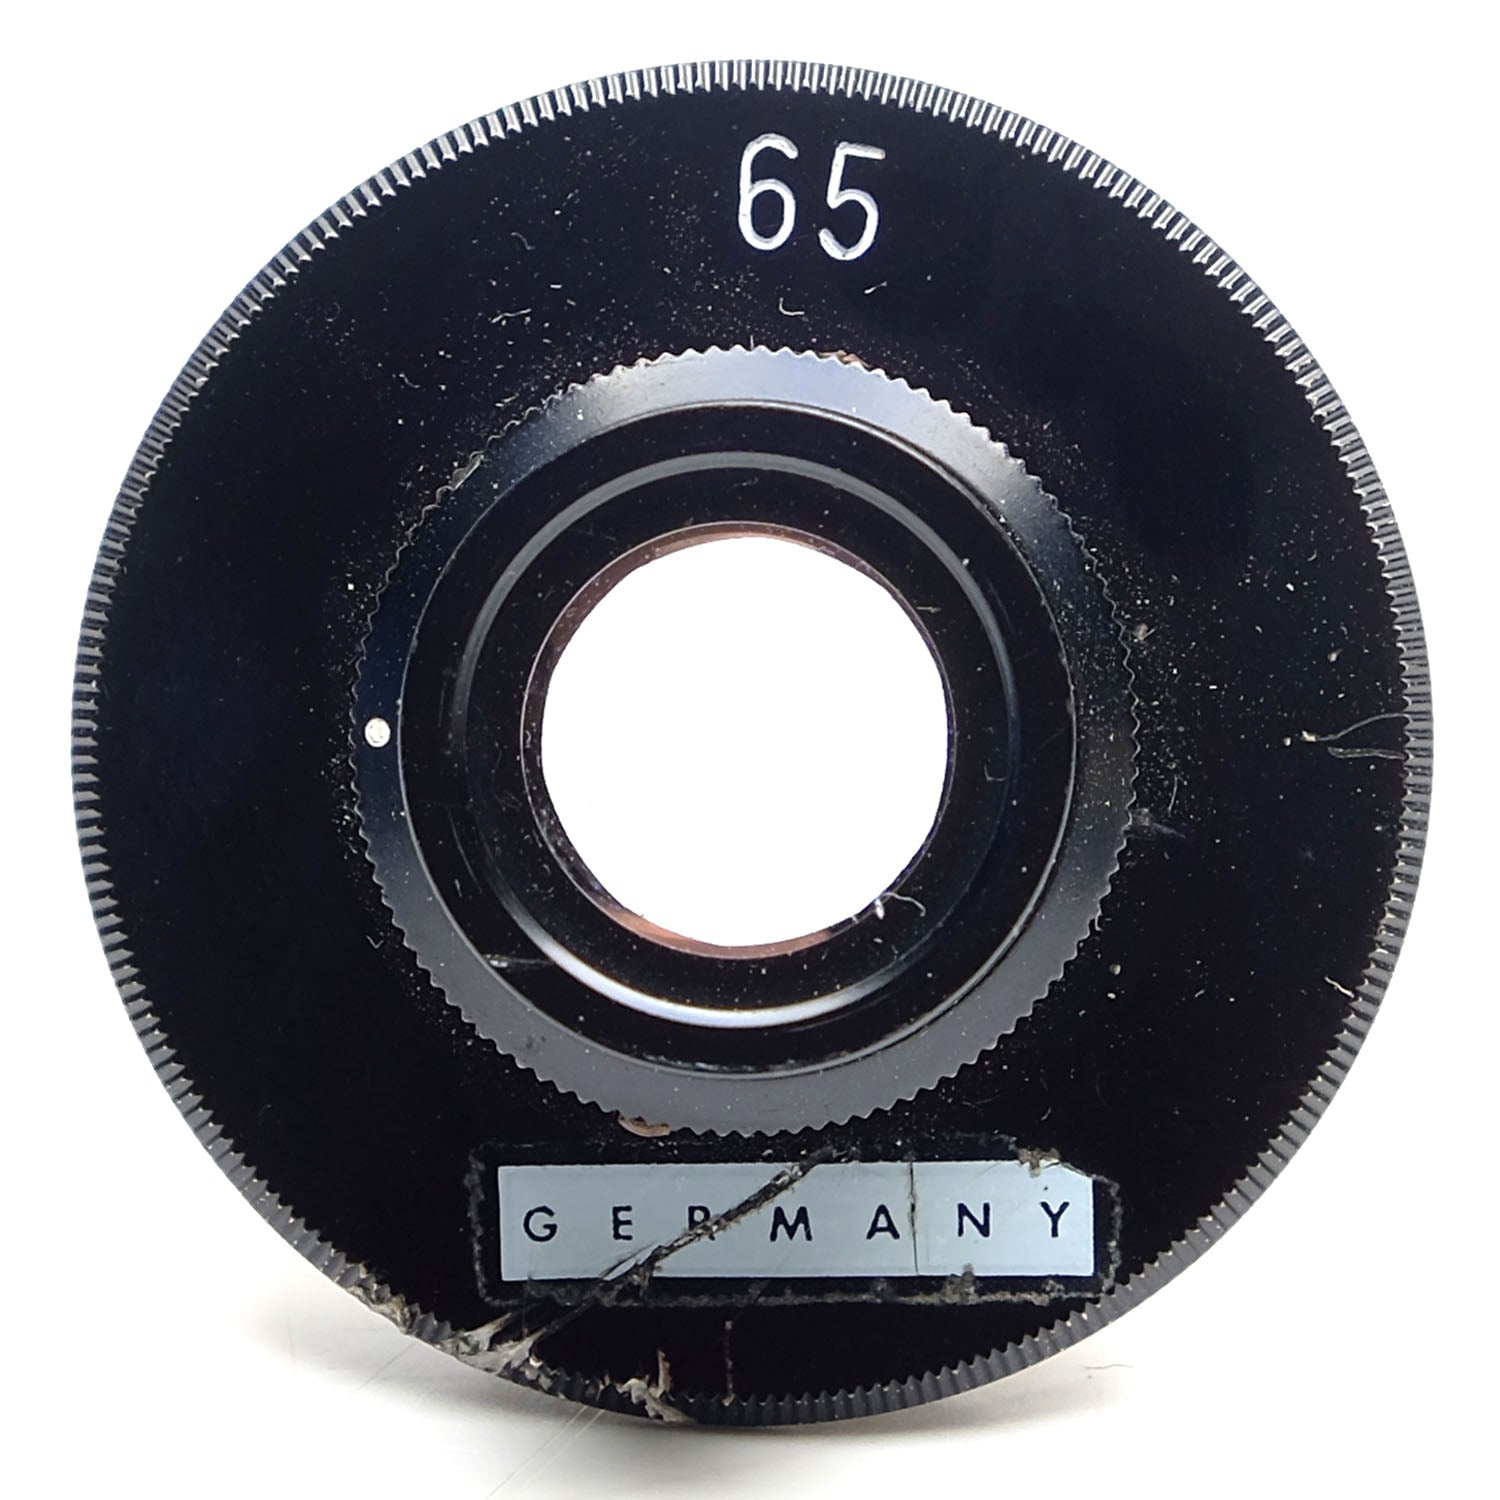 Leica 6.5cm f4.5 Milar 37402